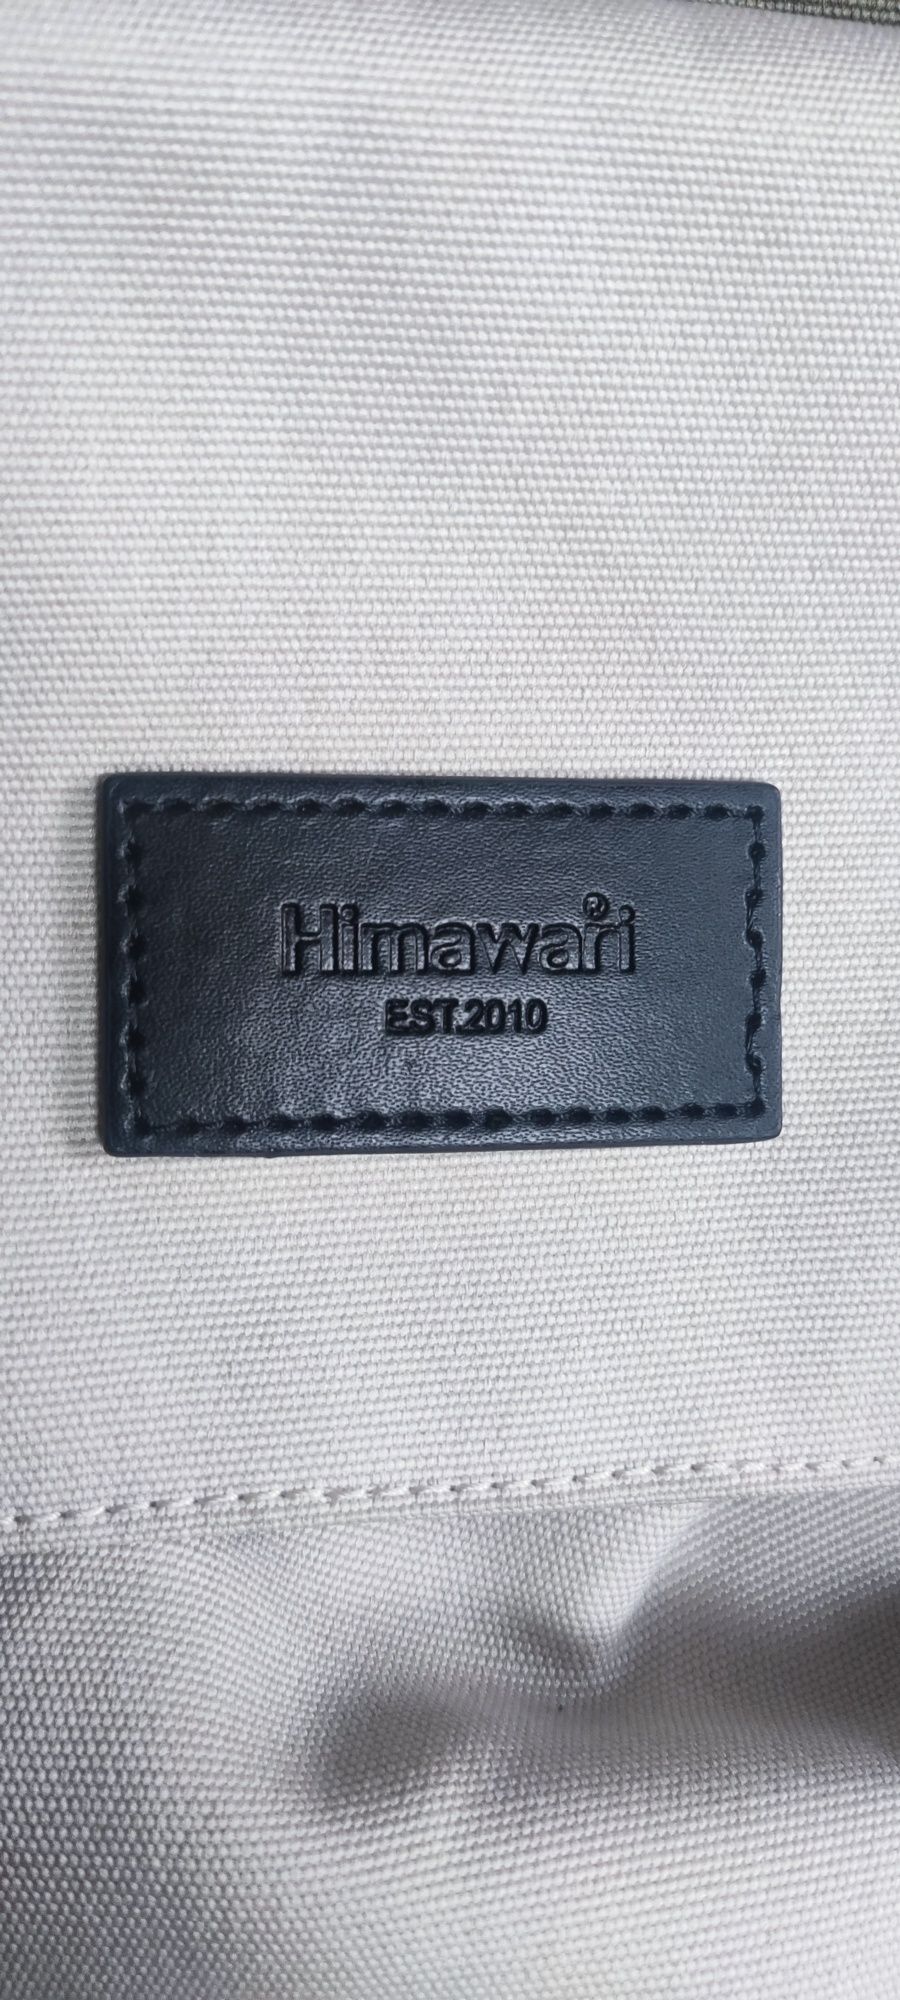 Plecak firmy Himawari